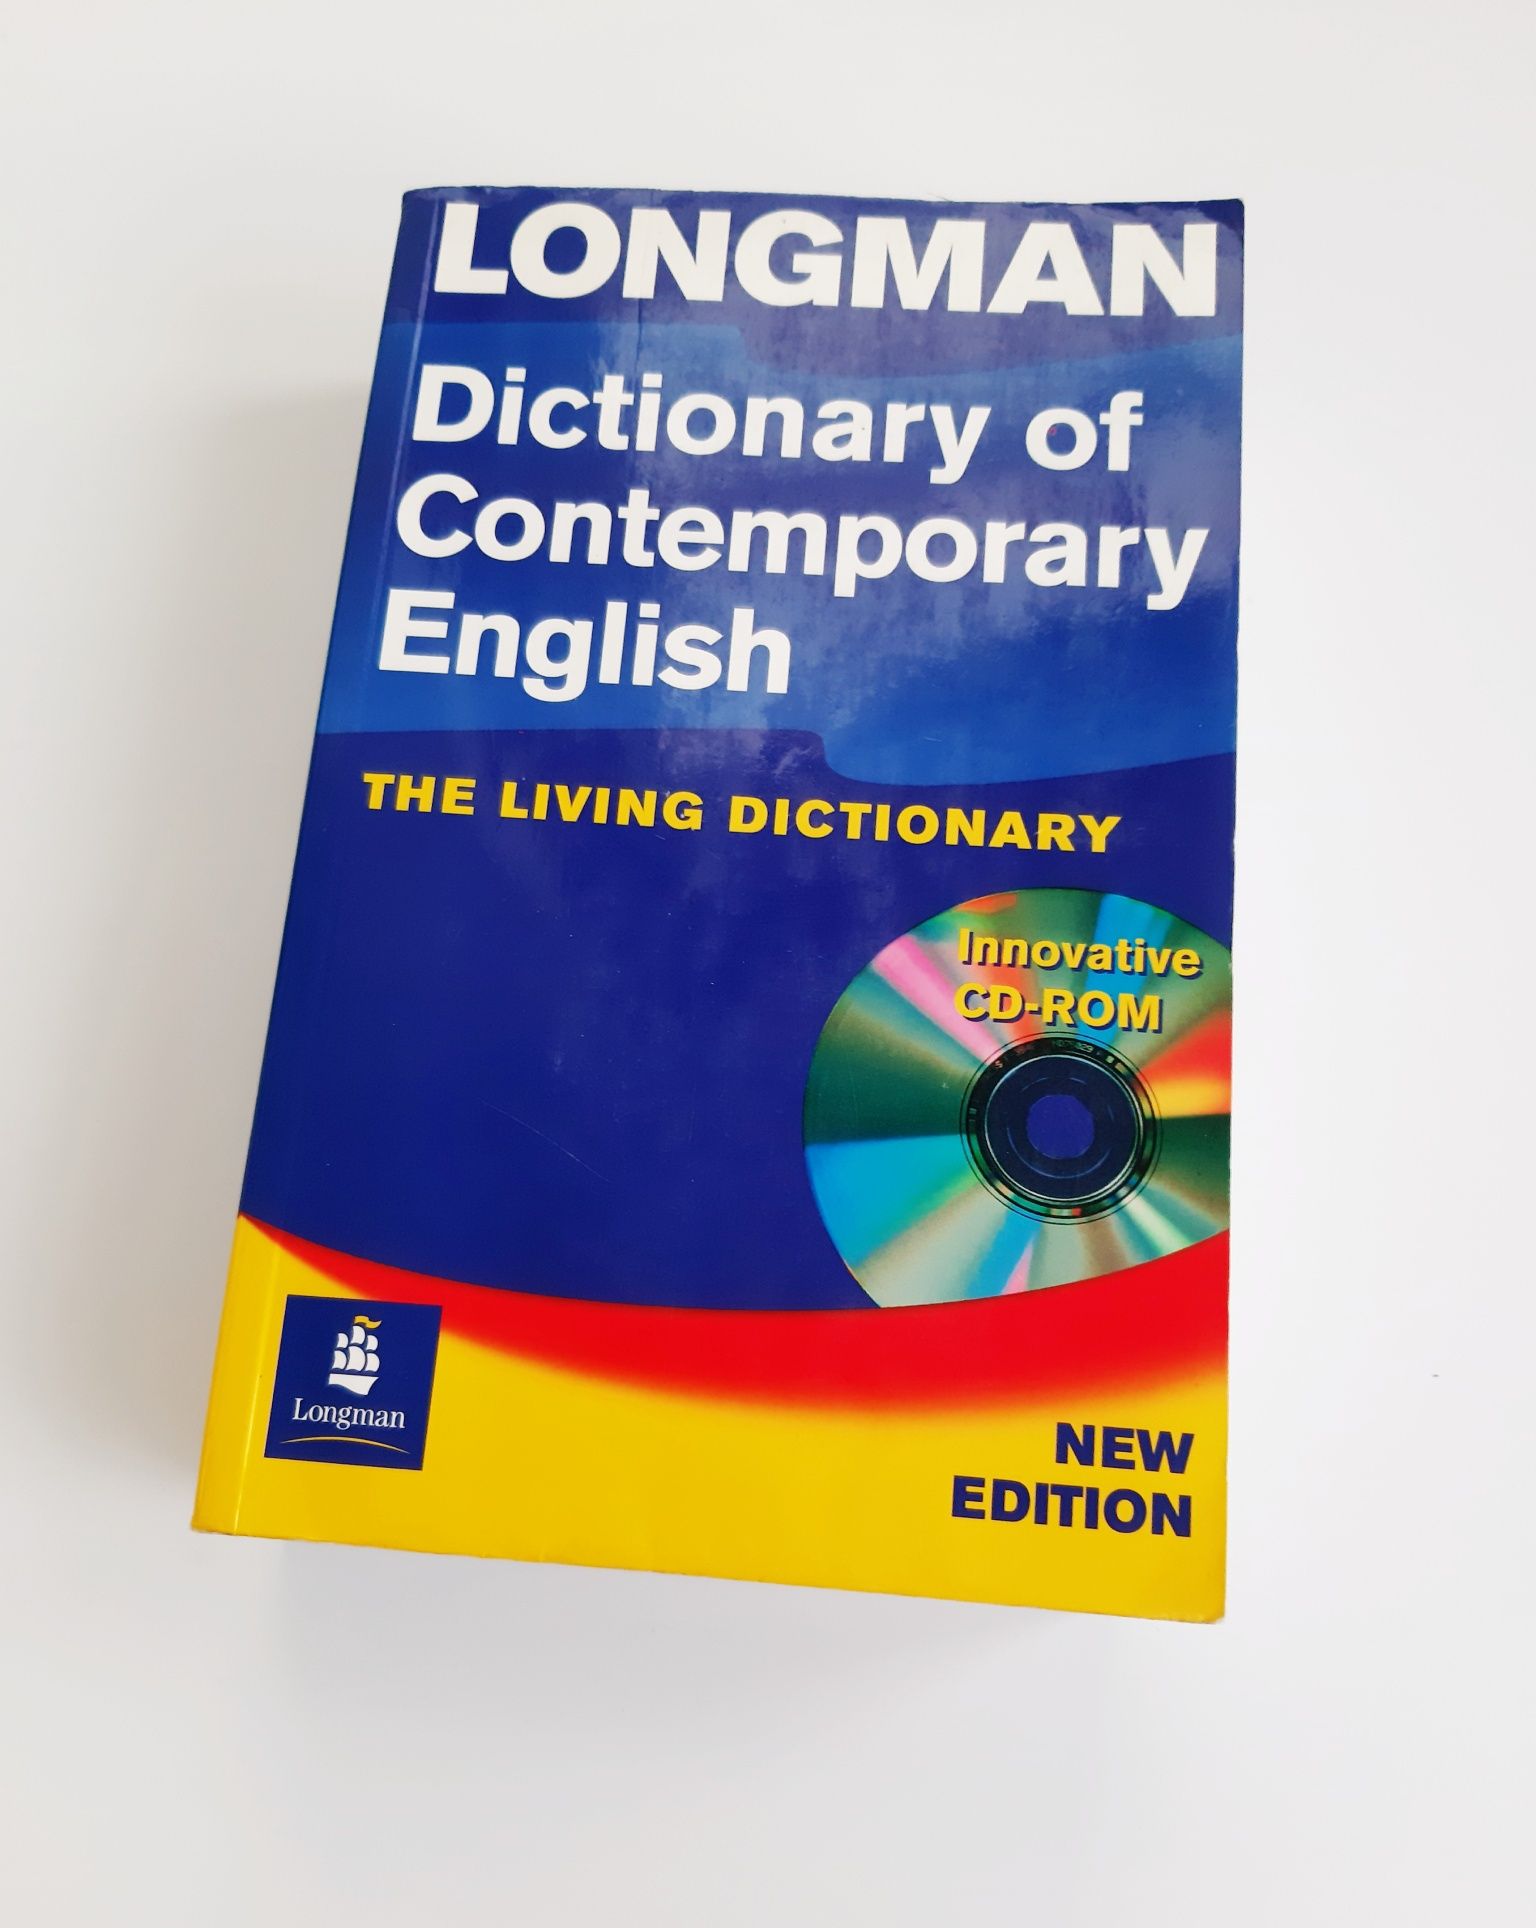 Longman Dictionary of Contemporary English
Słownik angielski